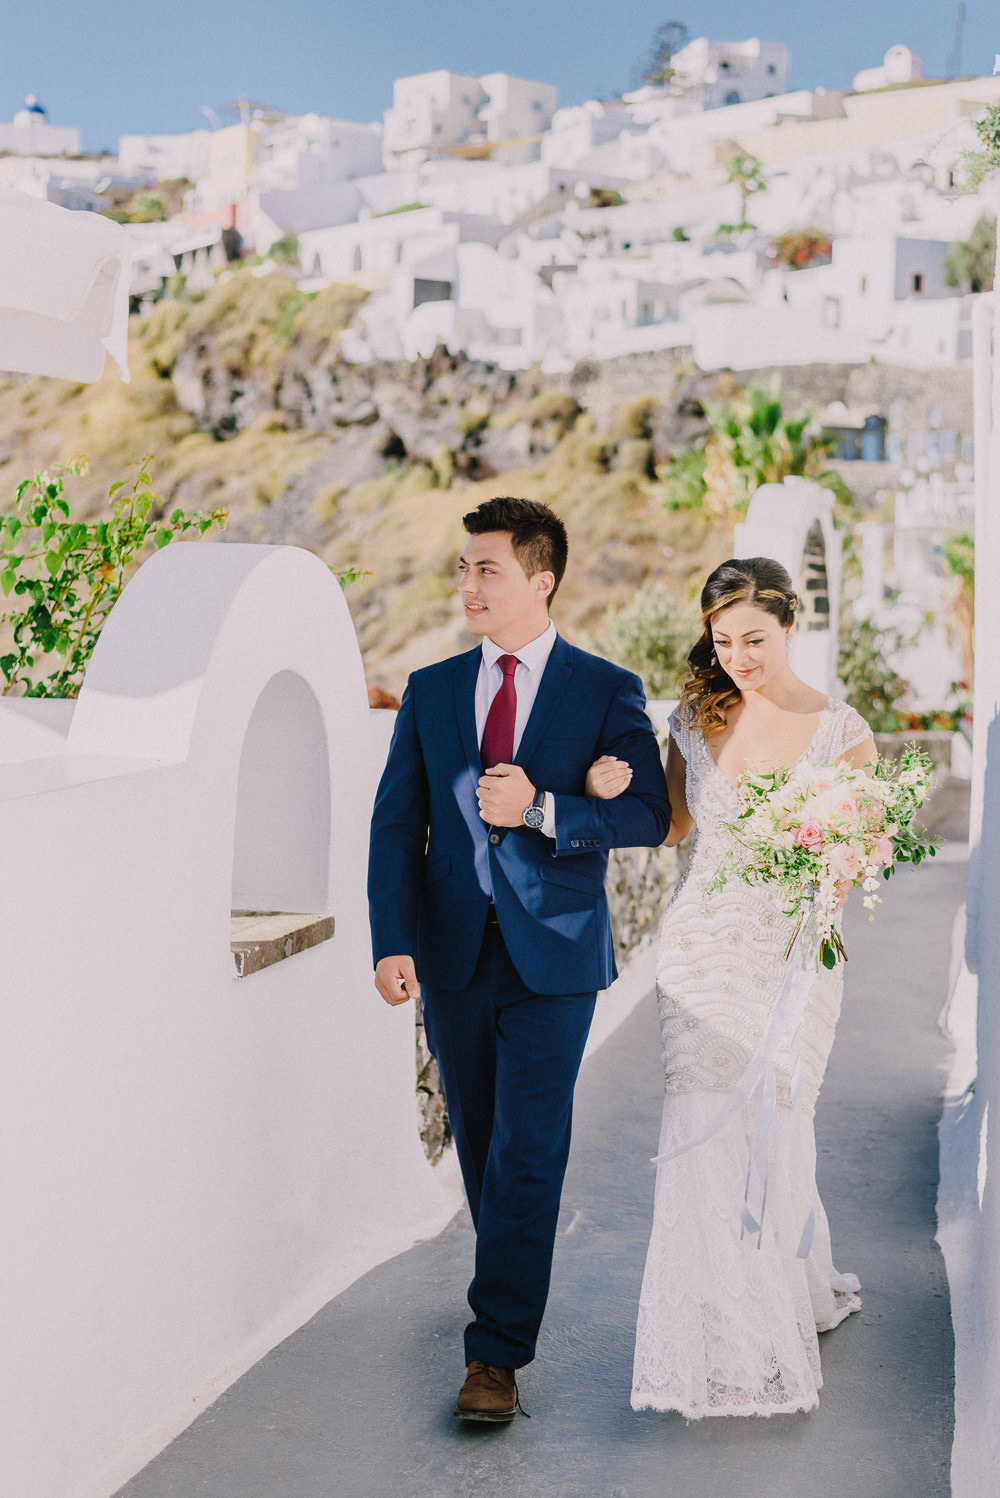 Santorini Small Intimate Wedding Dana villas santorini wedding ceremony